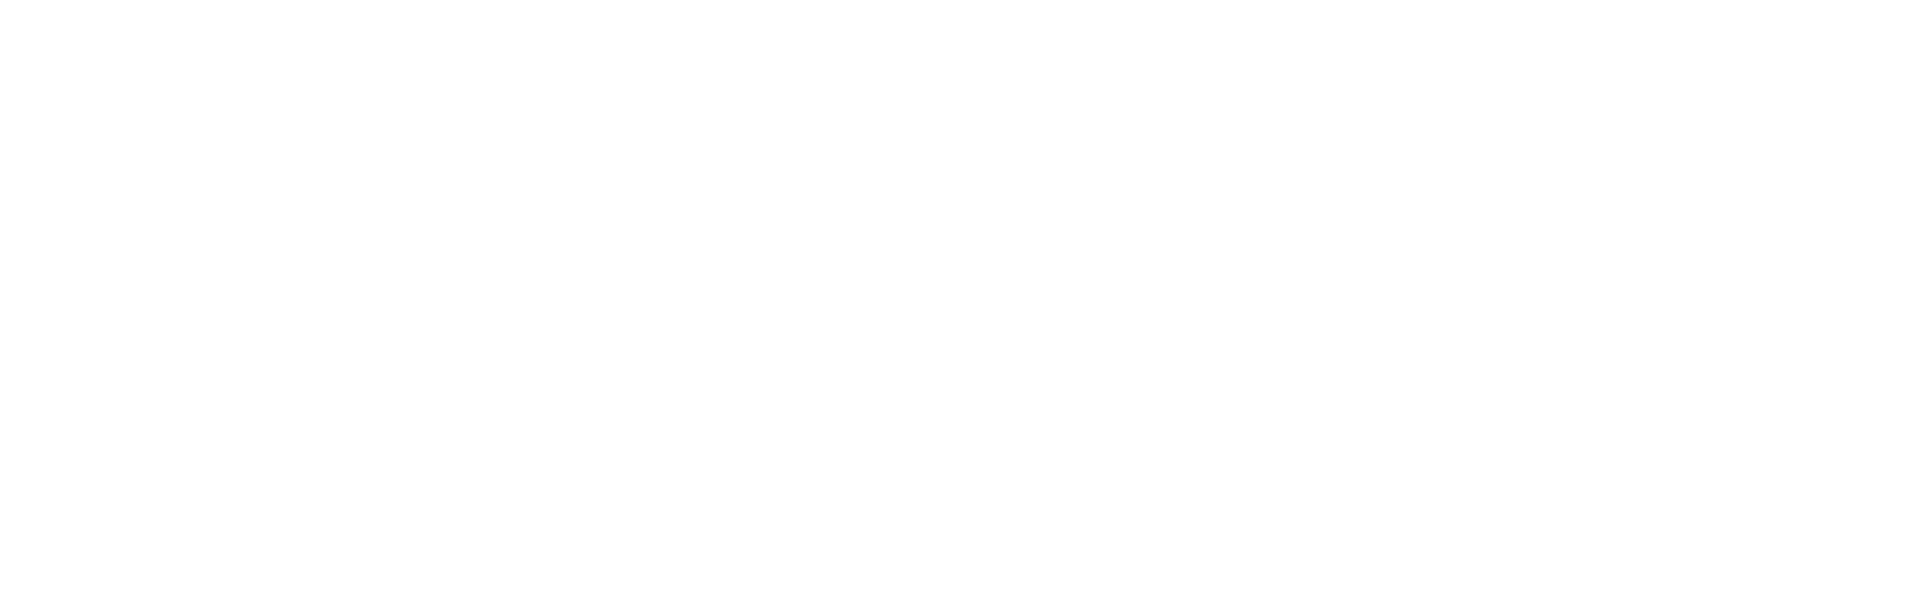 Restaurant Alexo logo